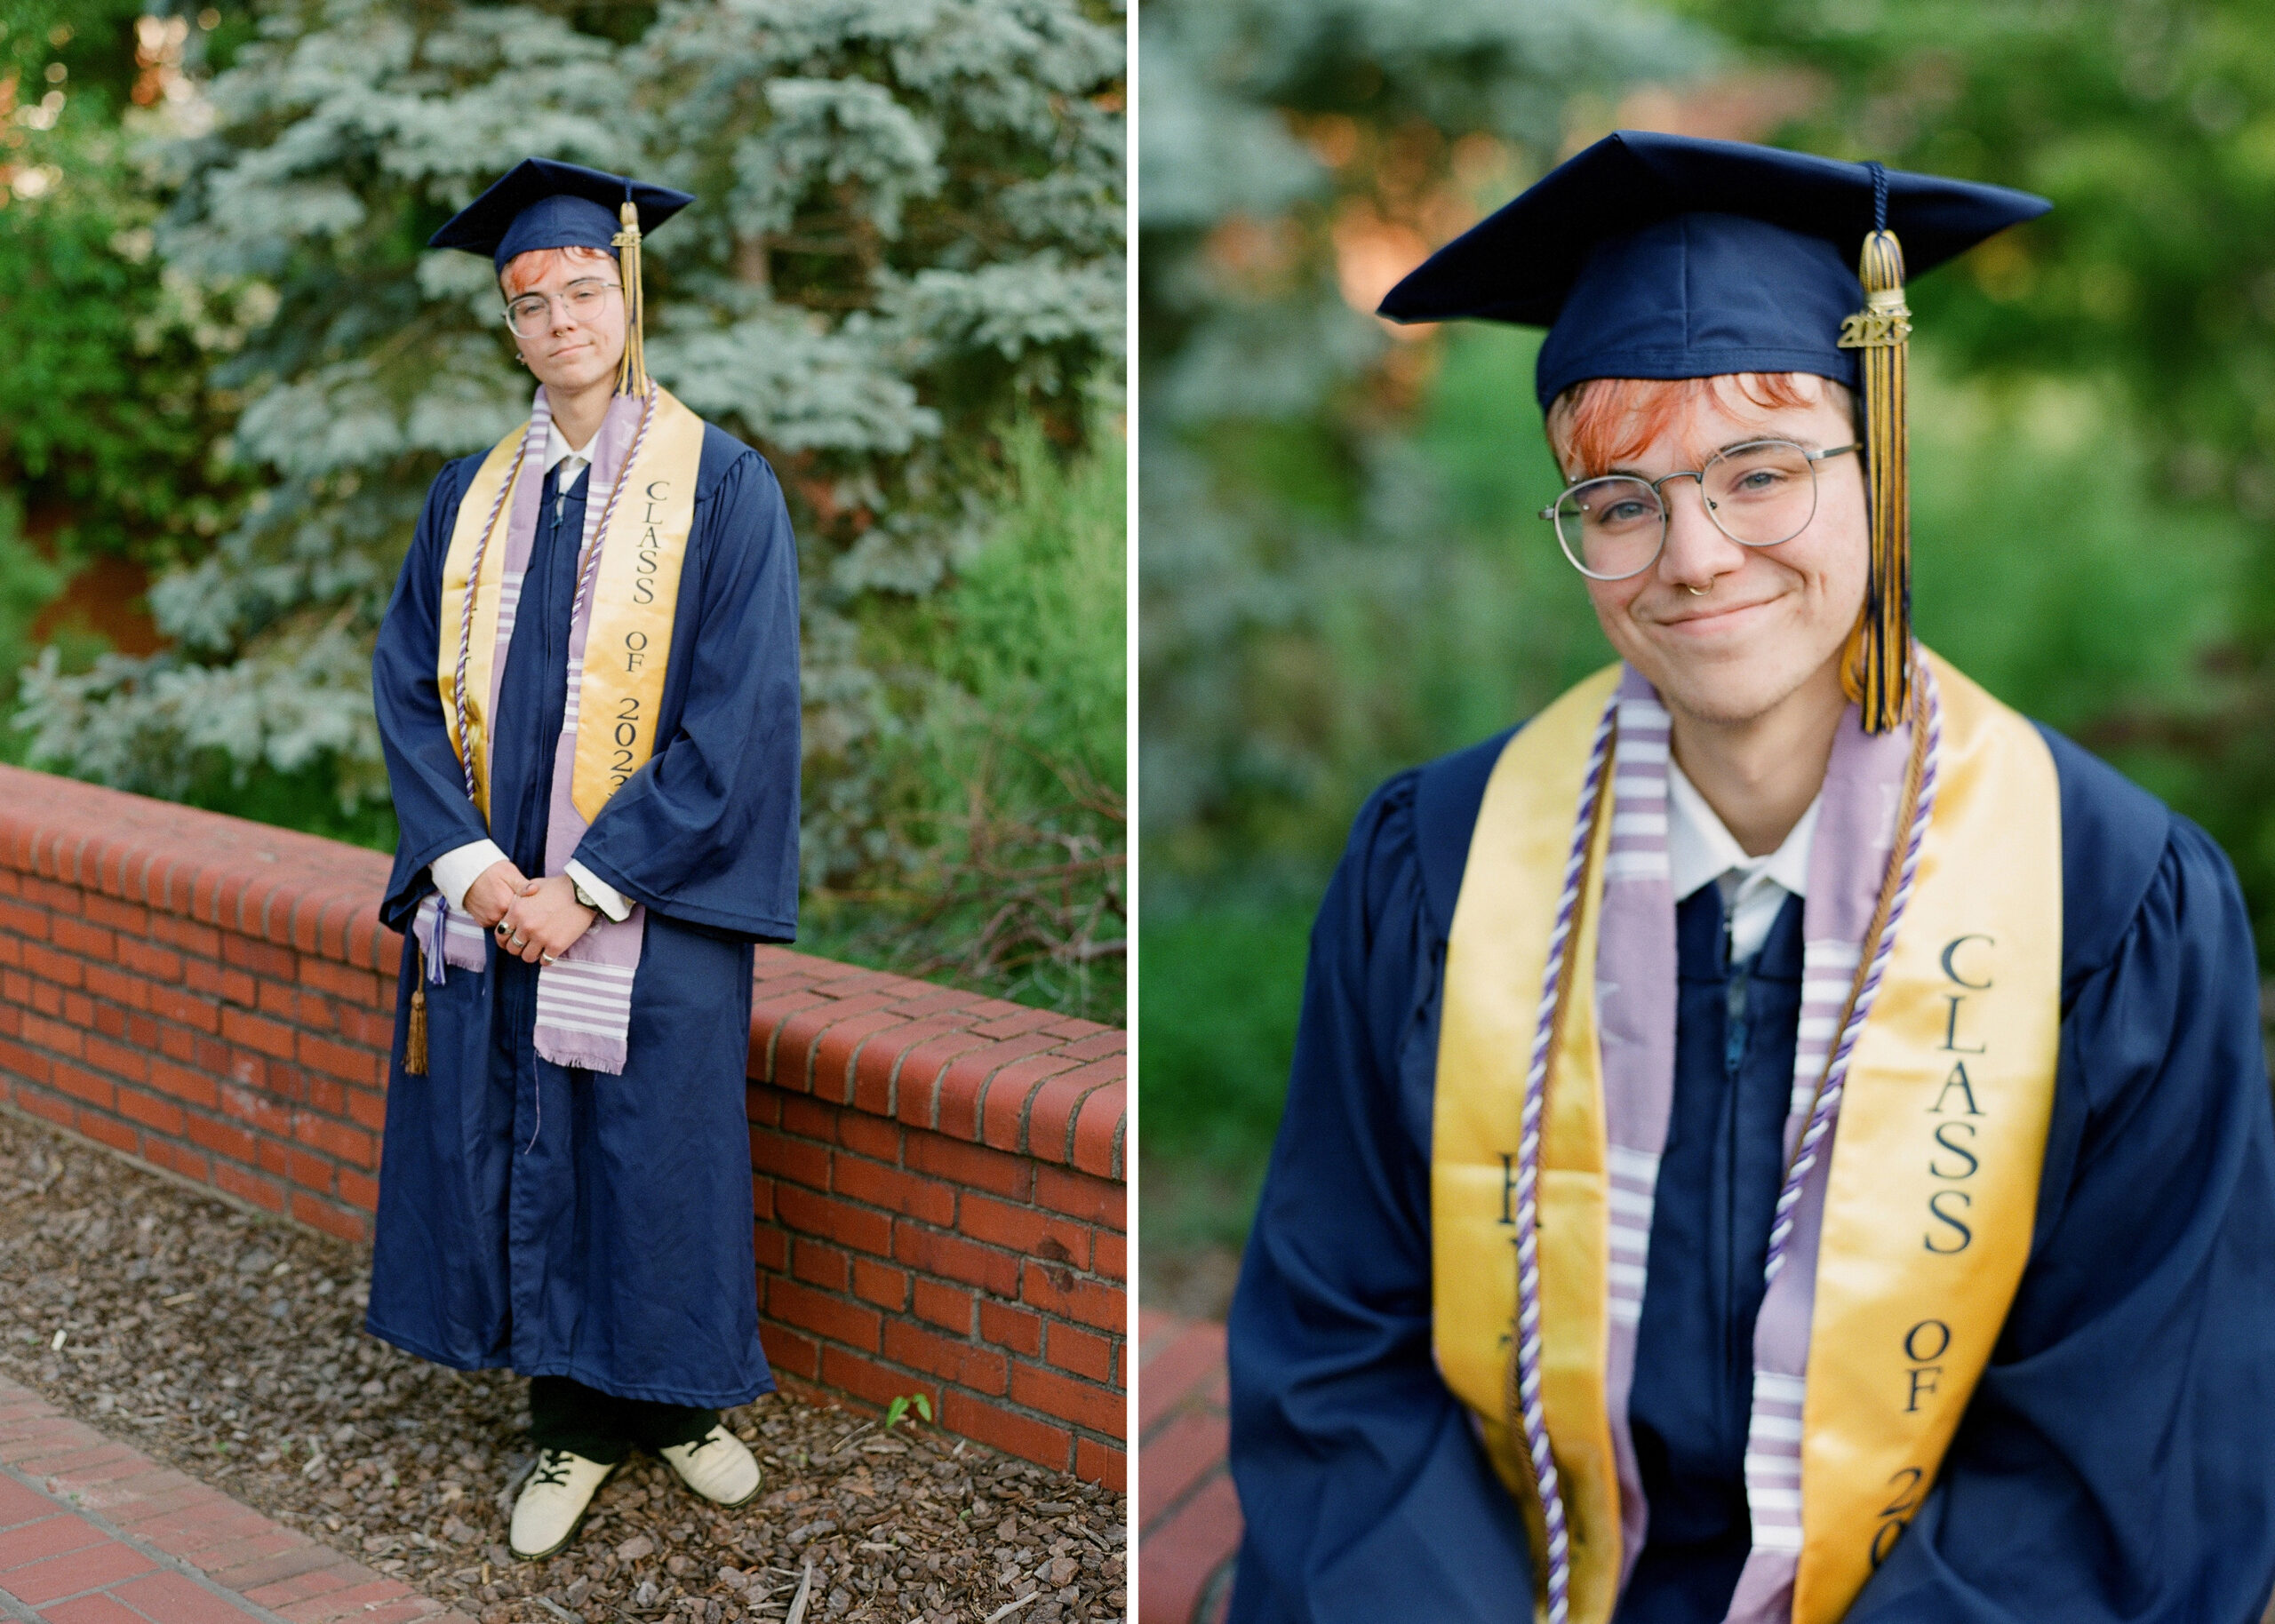 raleigh senior portrait photographer, senior pictures, graduation